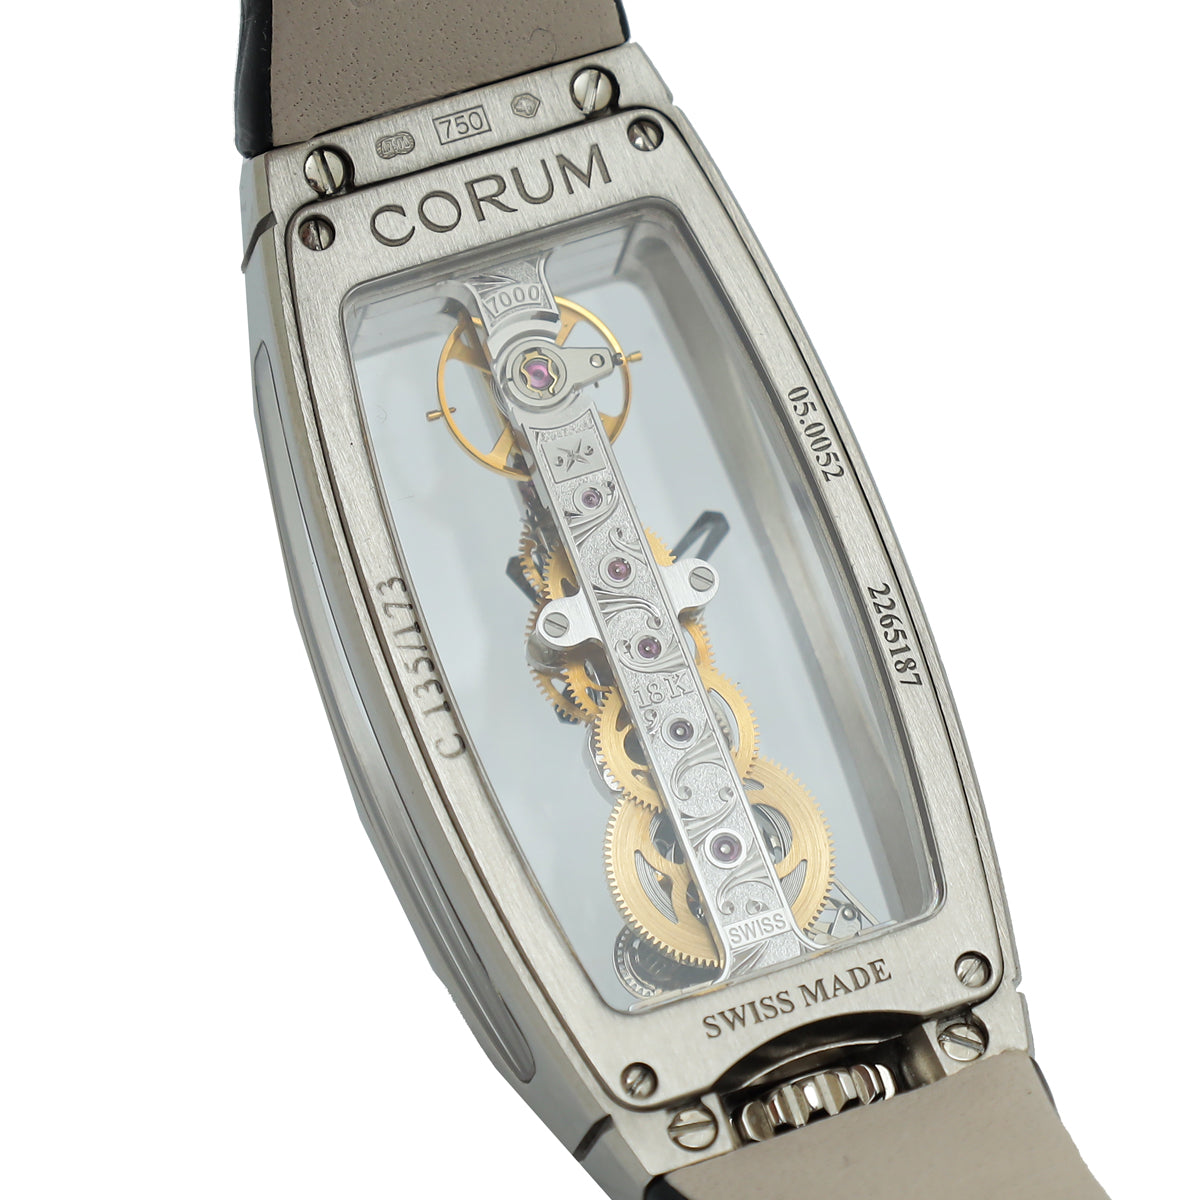 Corum 18K White Gold with Black Golden Bridge Skeleton Dial 43mm Watch